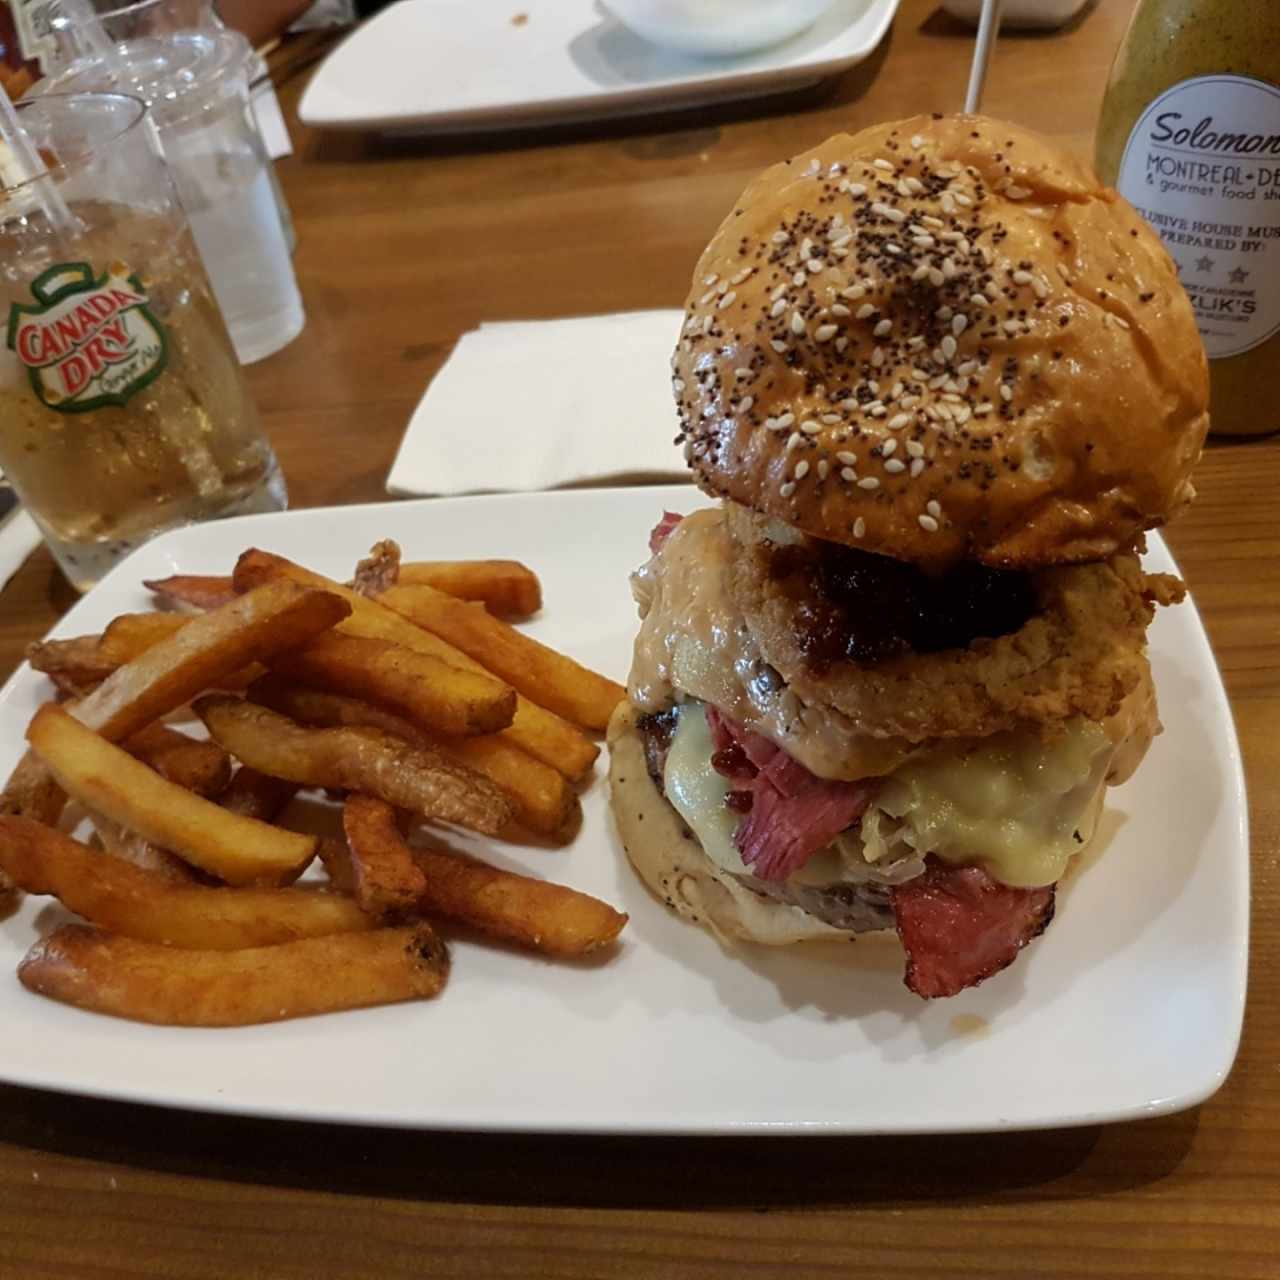 The Big Fucking Burger 😲